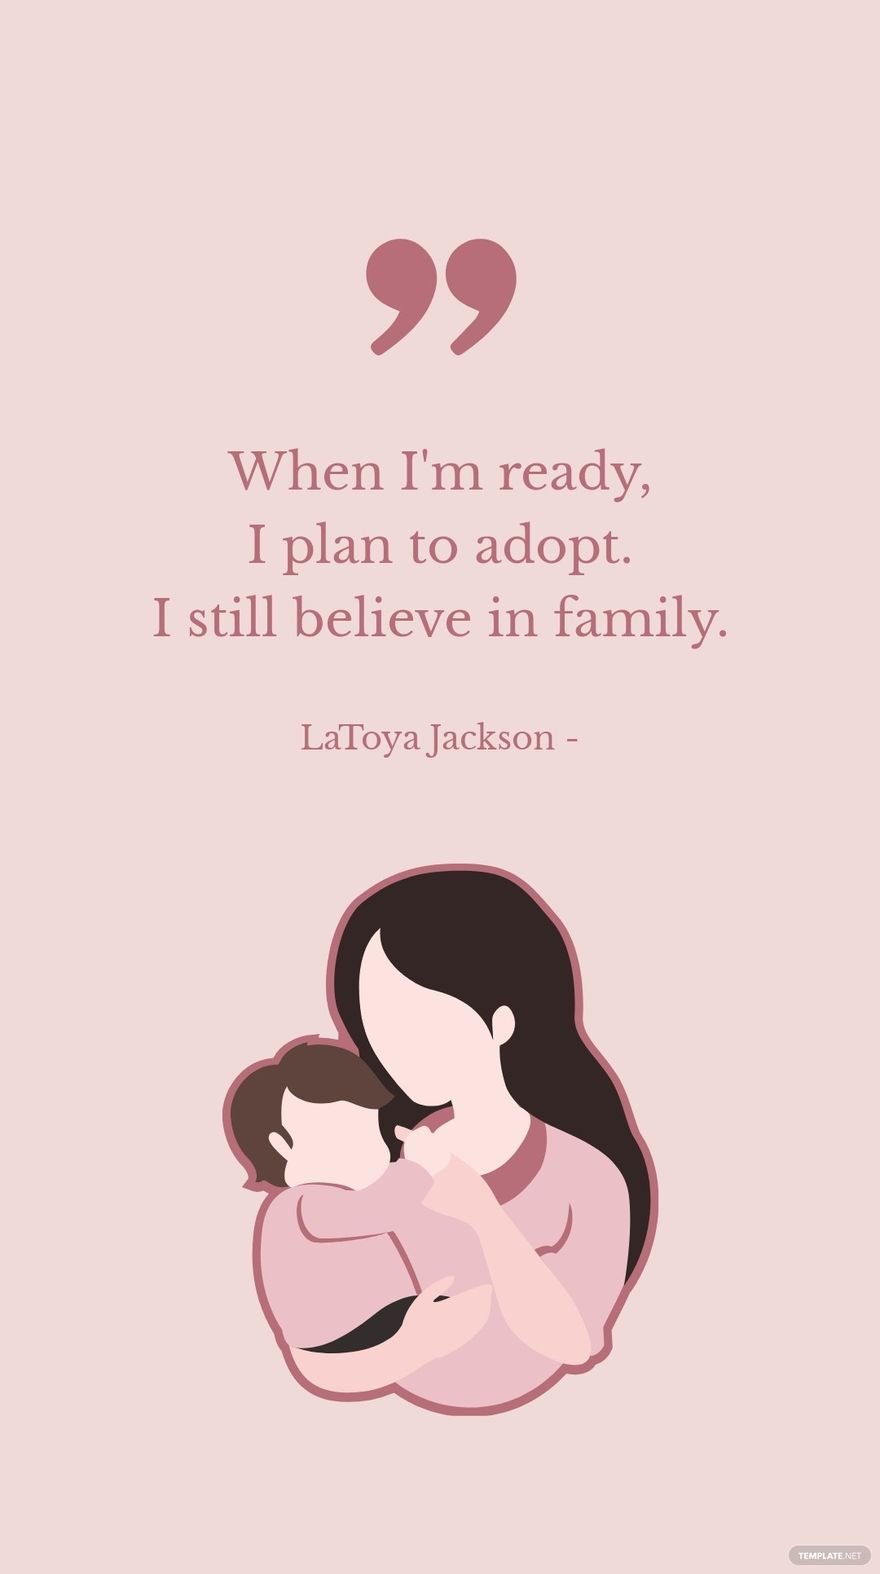 Free LaToya Jackson - When I'm ready, I plan to adopt. I still believe in family.